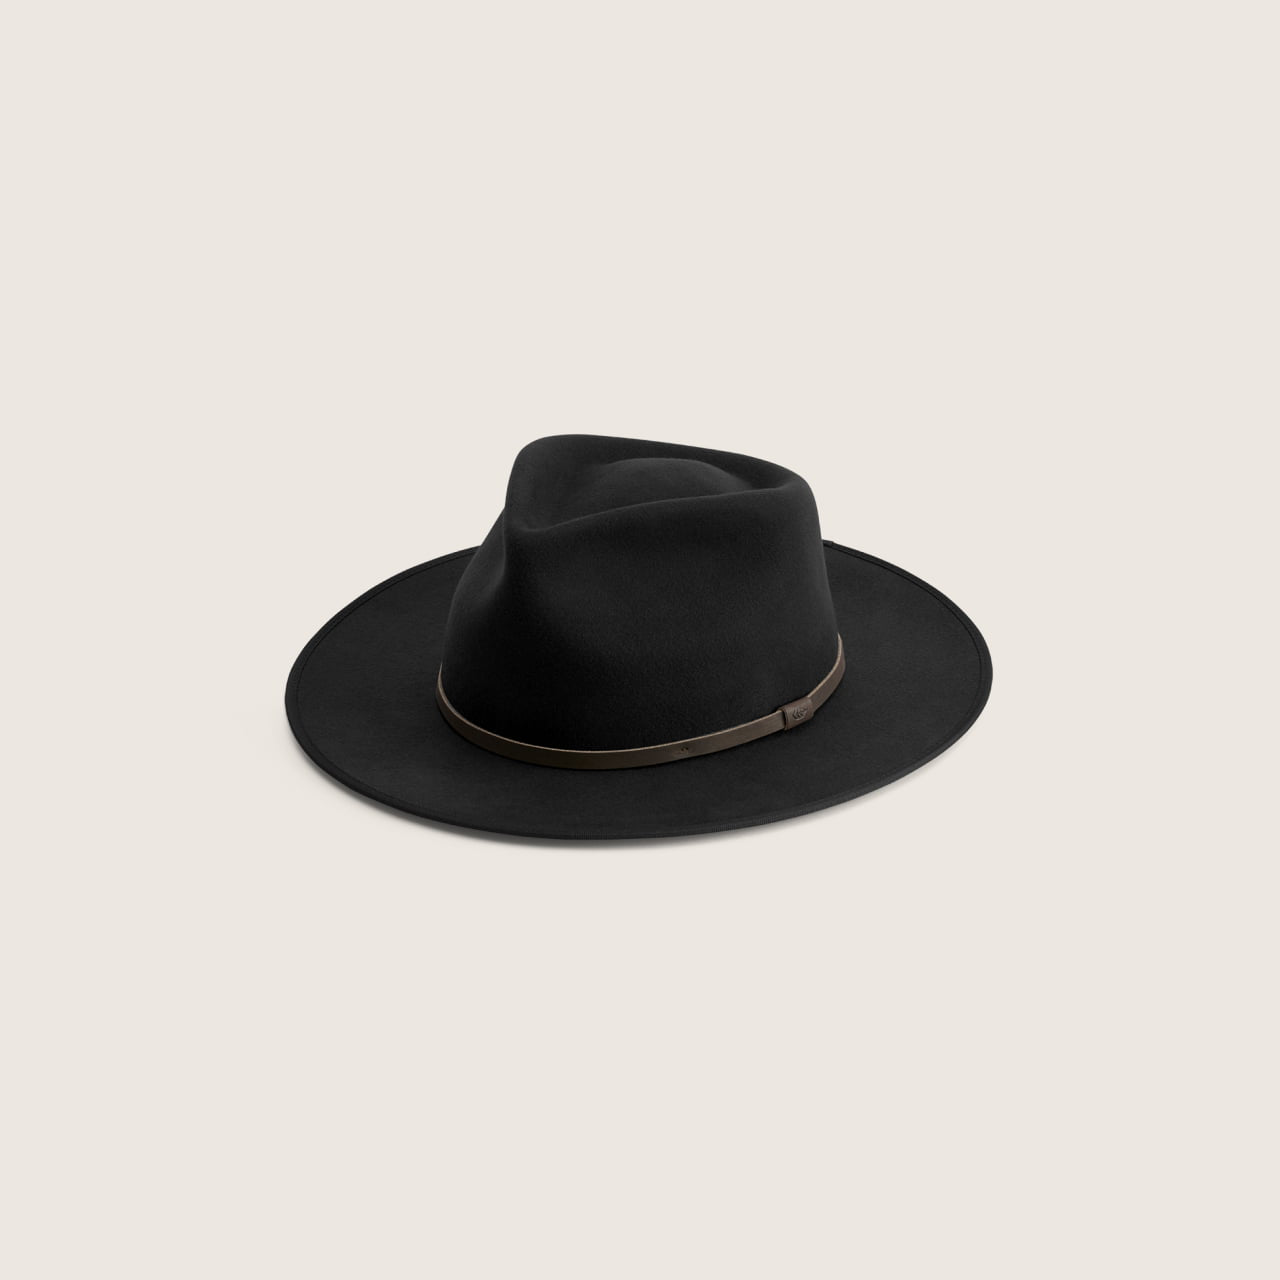 Calloway Black Front View - Merino Wool Wide Brim Hat for Men & Women